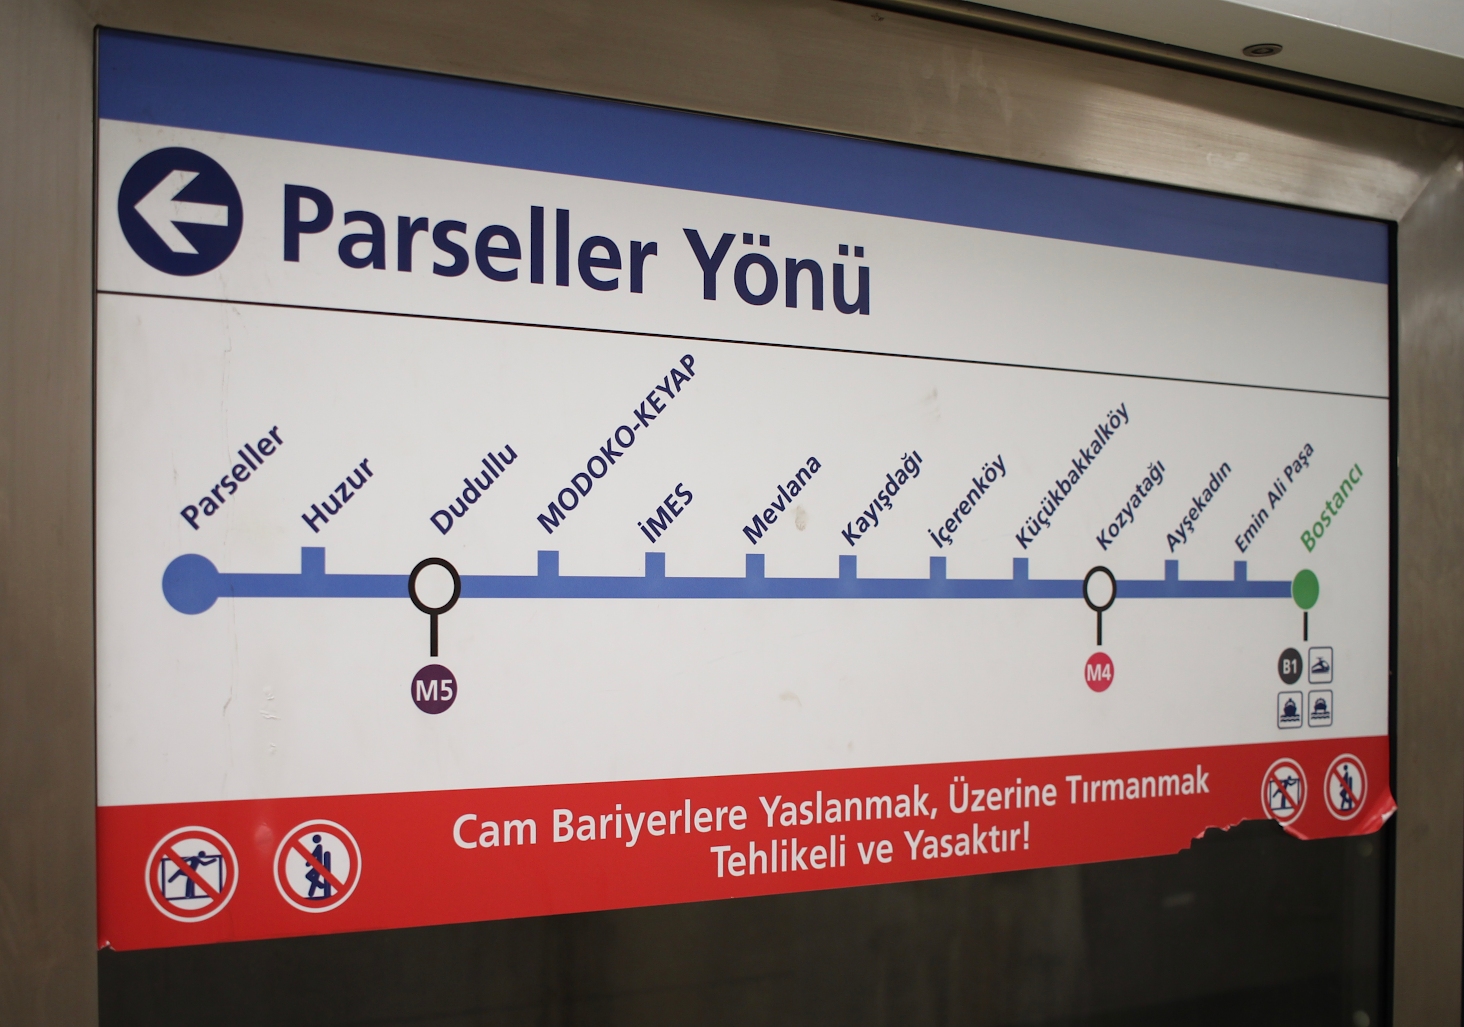 Стамбул — Метрополитен — Линия M8 (Bostancı — Parseller); Стамбул — Схемы на станциях и остановках